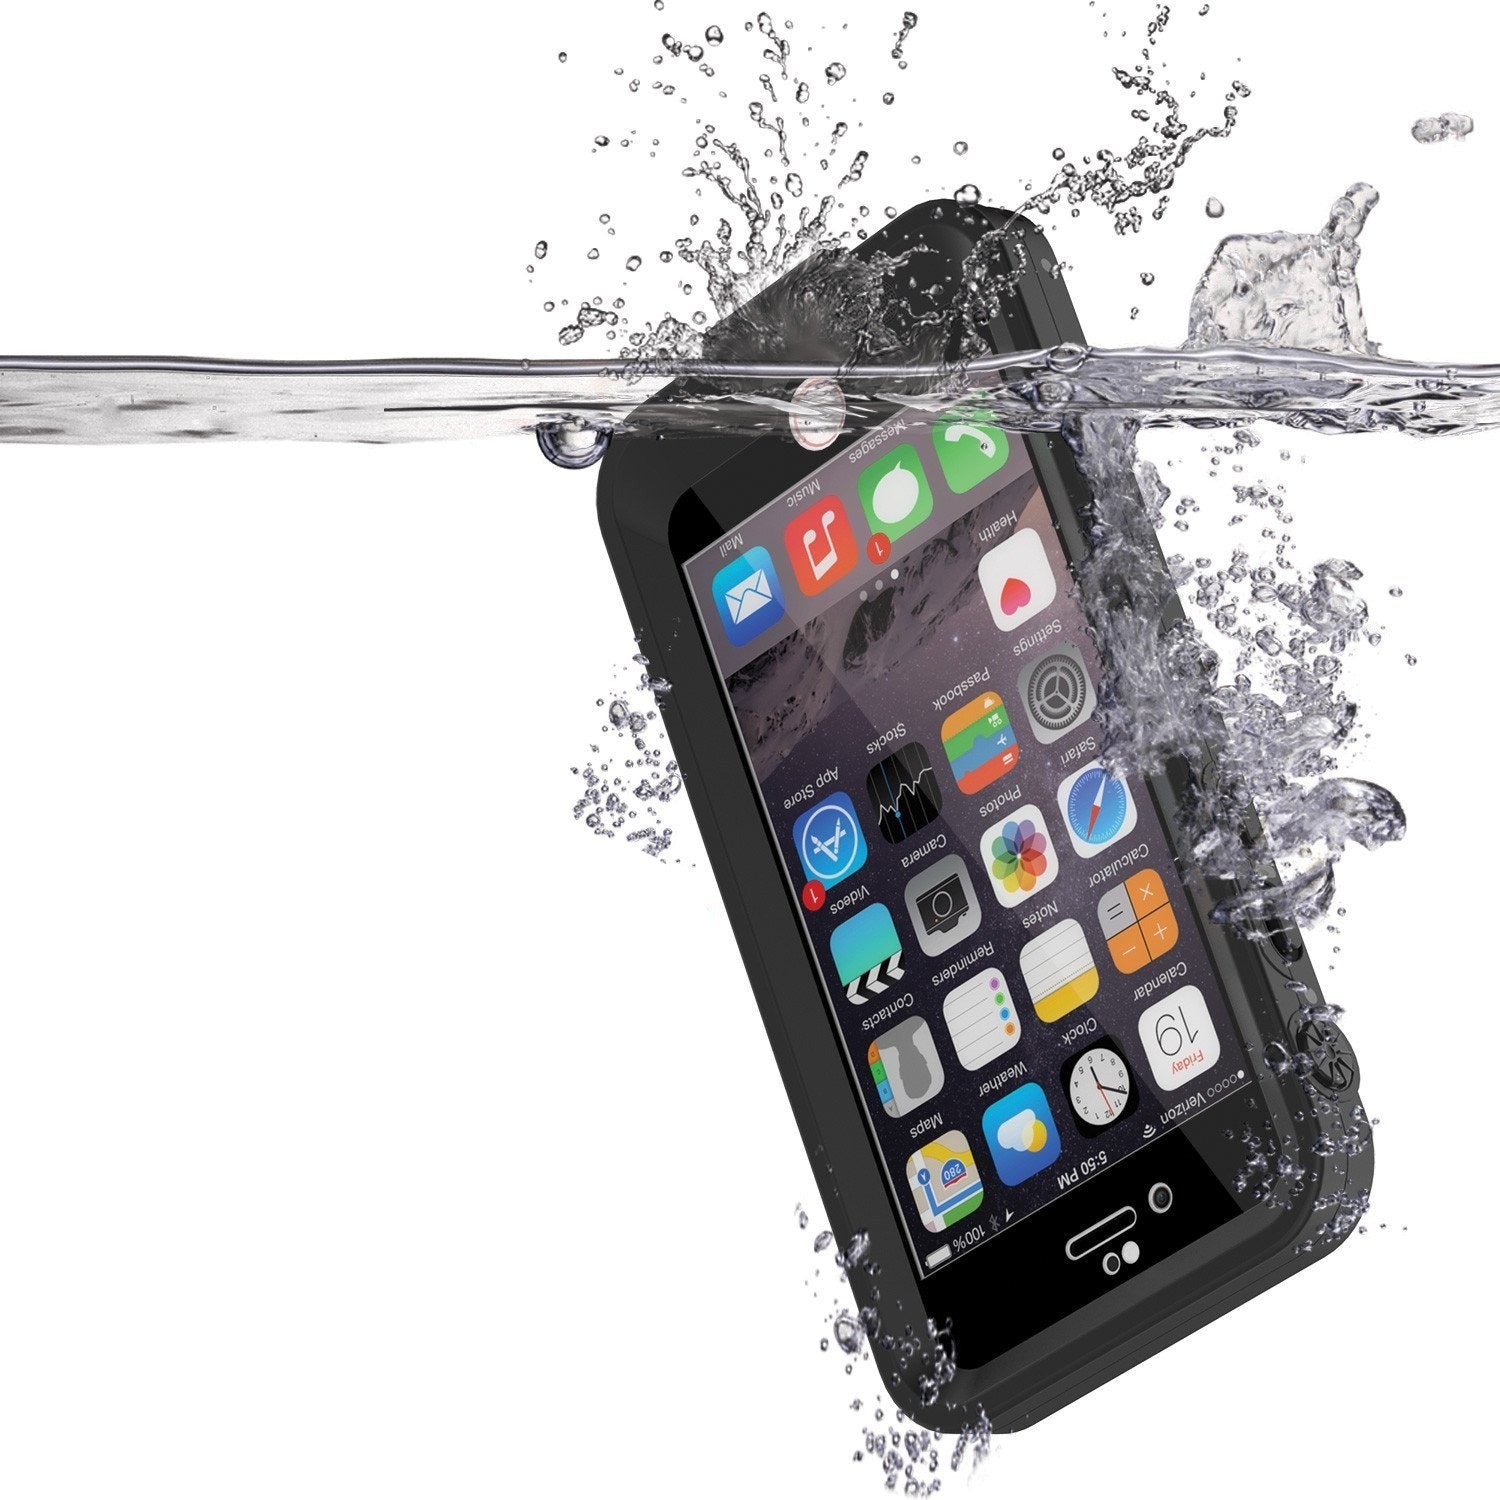 PunkJuice iPhone 6/6s Battery Case Black Waterproof Power Juice Bank w/ 2750mAh  | Fastcharging